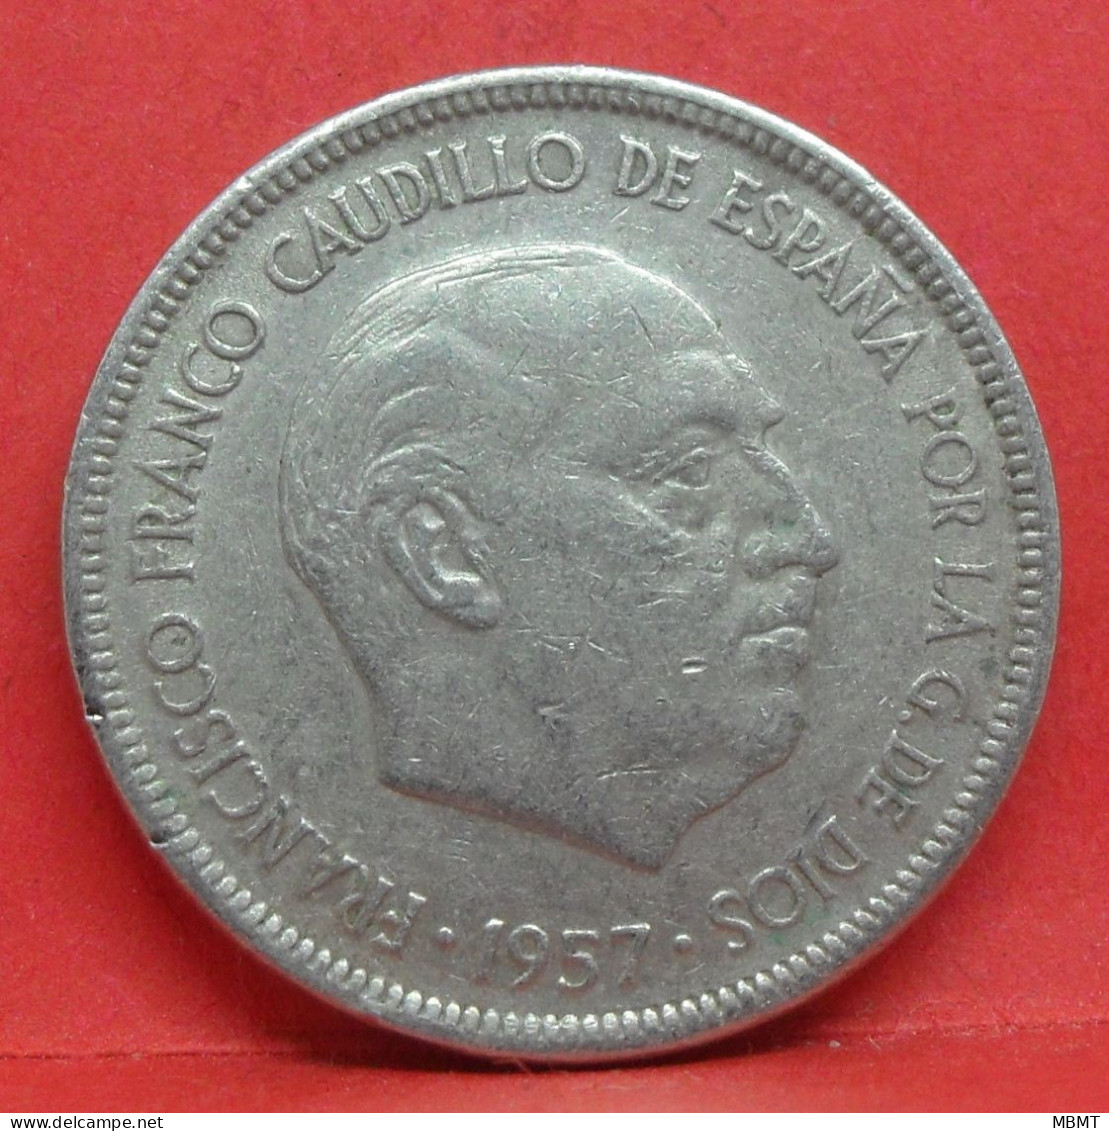 5 Pesetas 1957 étoile 68 - TTB - Pièce Monnaie Espagne - Article N°2346 - 5 Pesetas